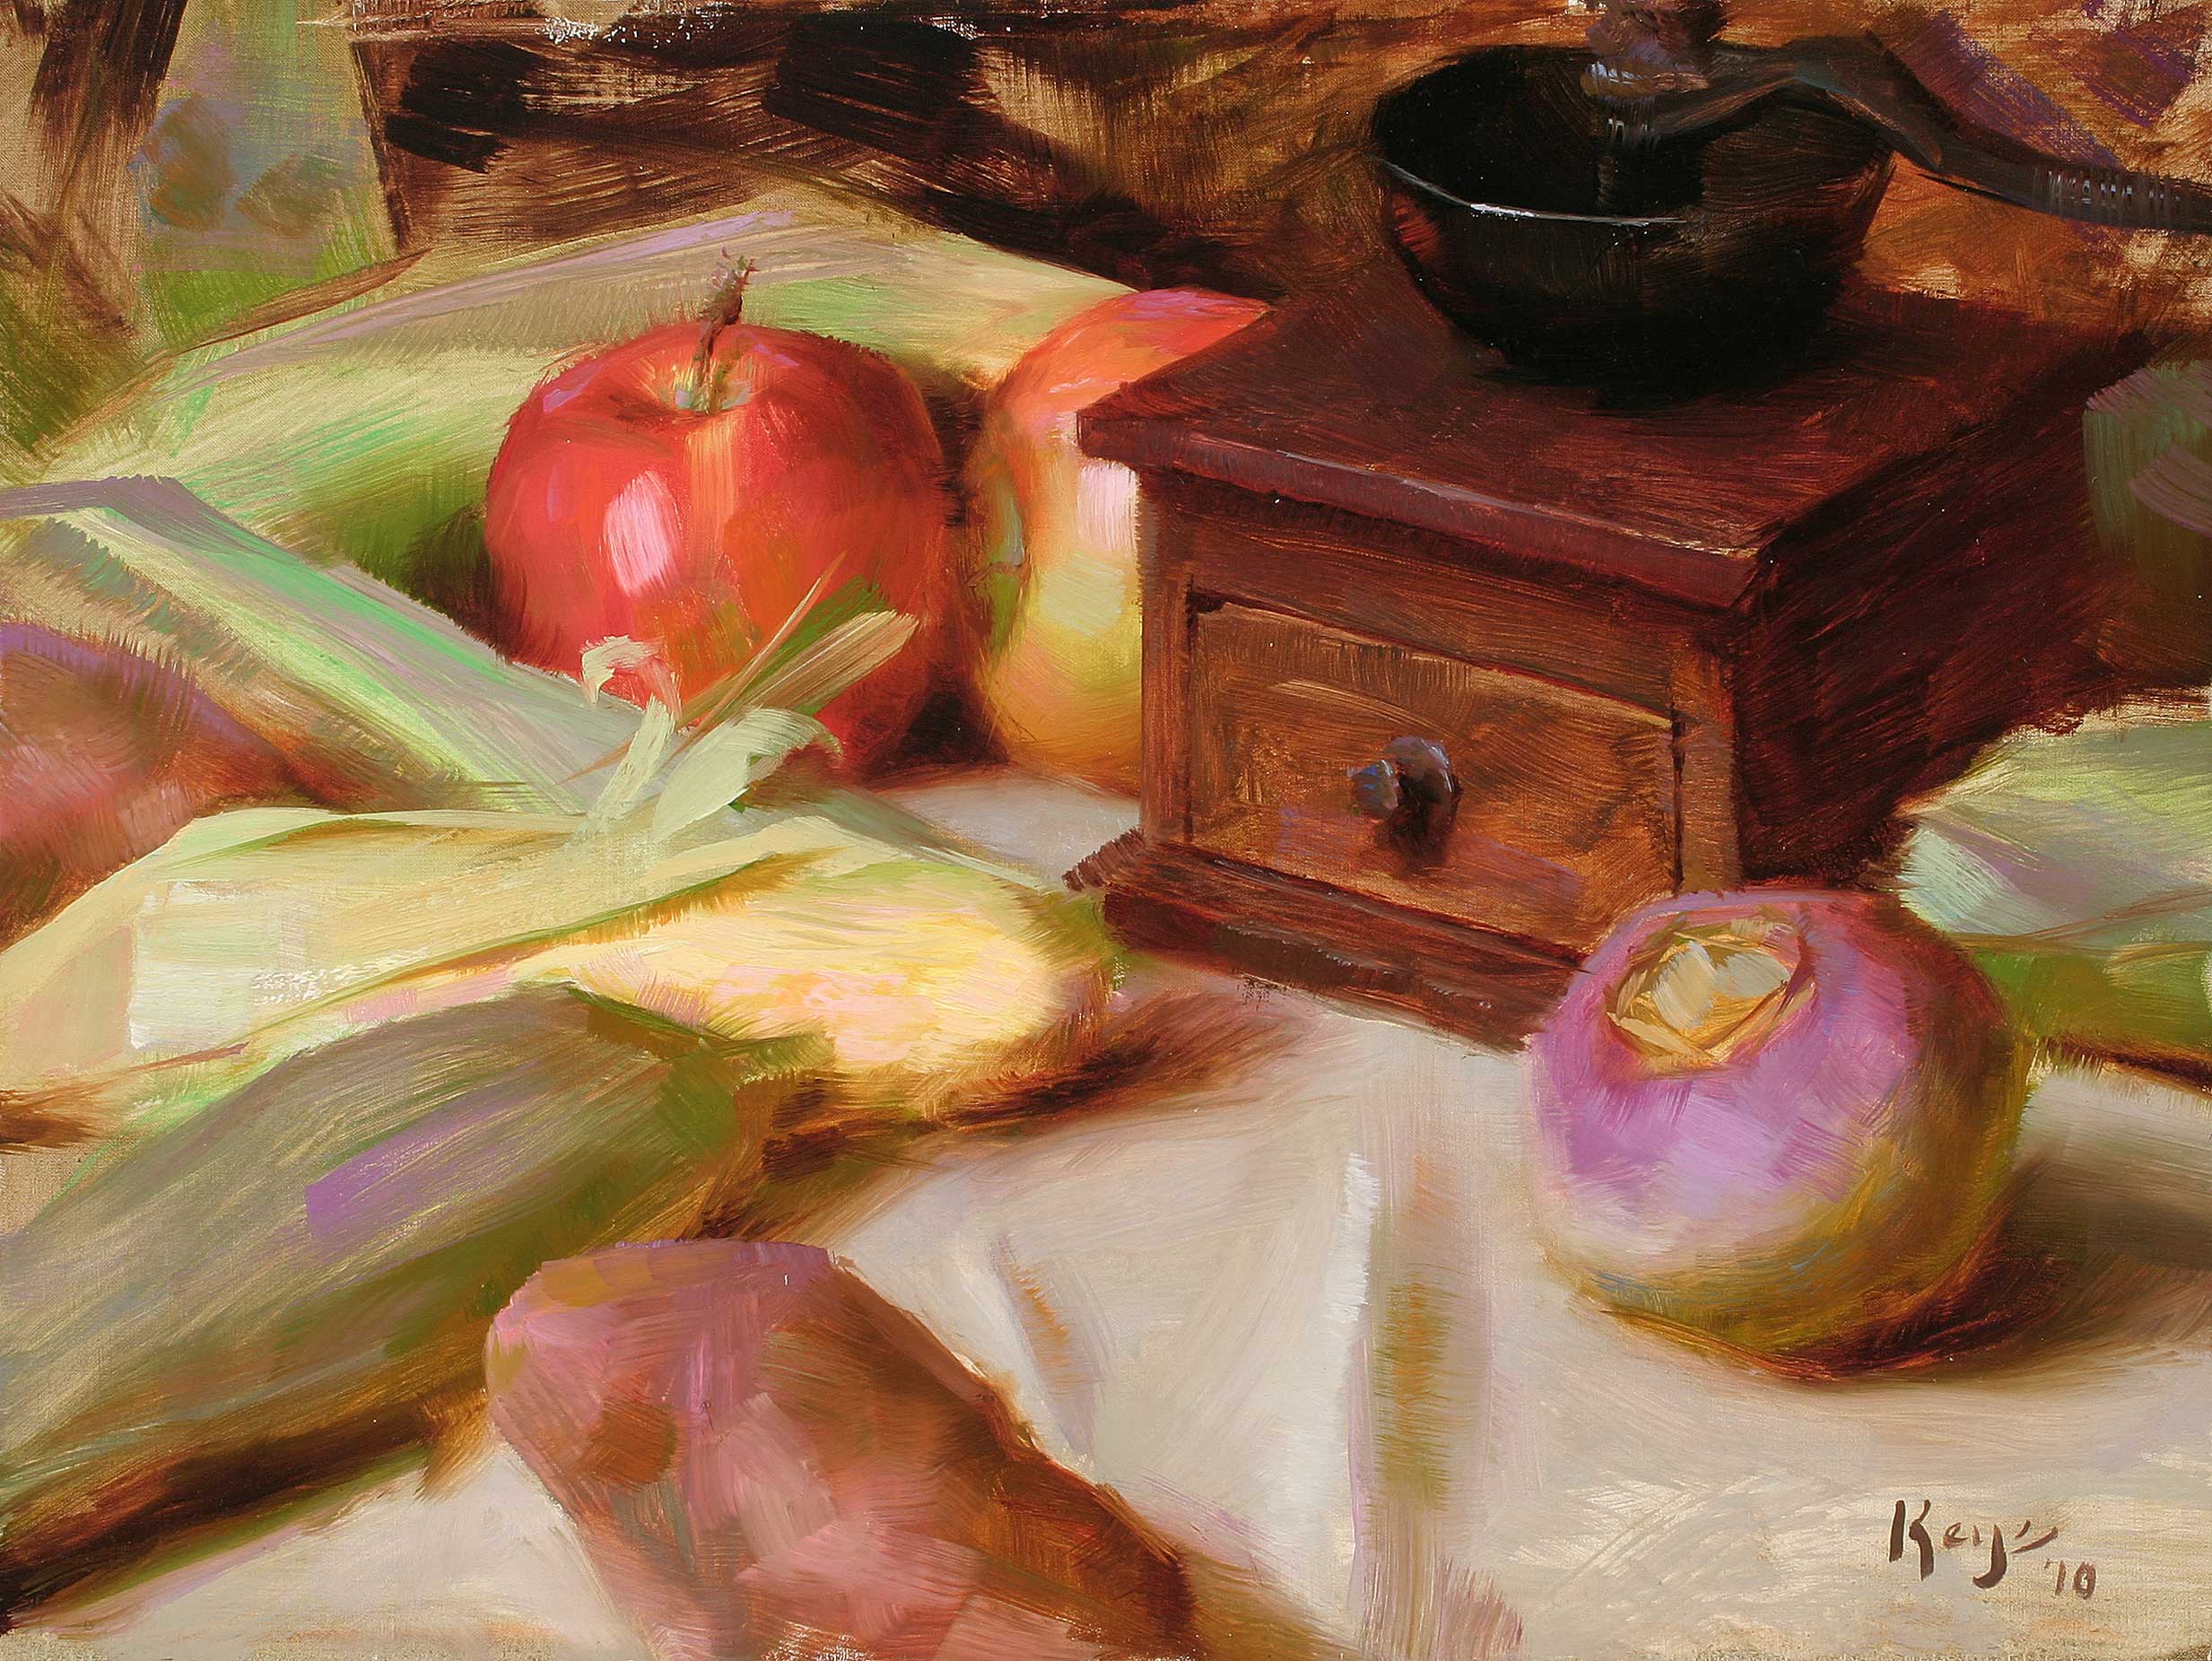 Representational art - Daniel Keys, "Antique Coffee-grinder with Vegetables," 2010, 12" x 16" oil on linen